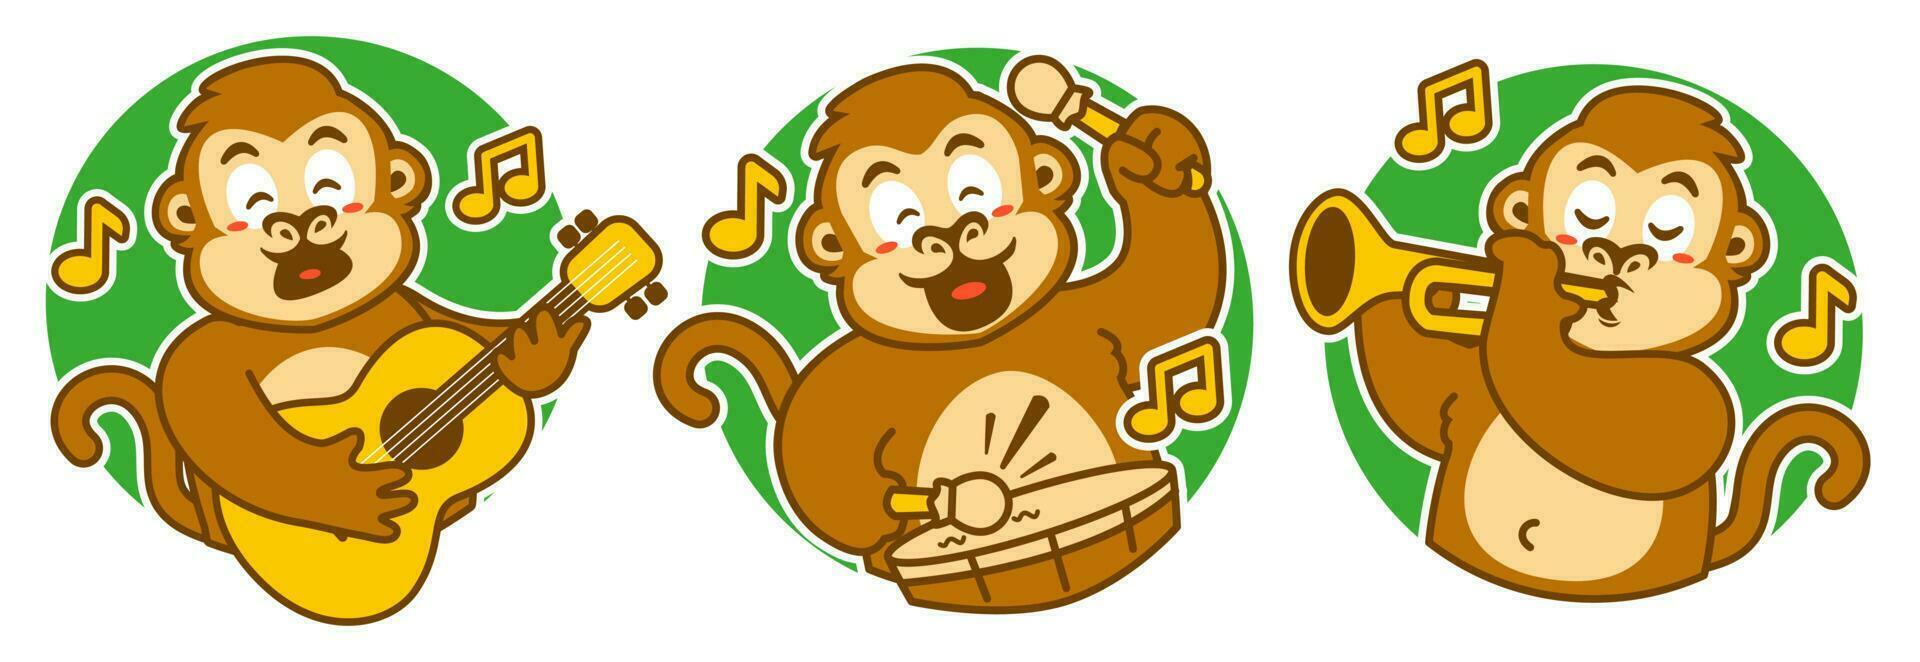 aap spelen muziek- sticker pak vector